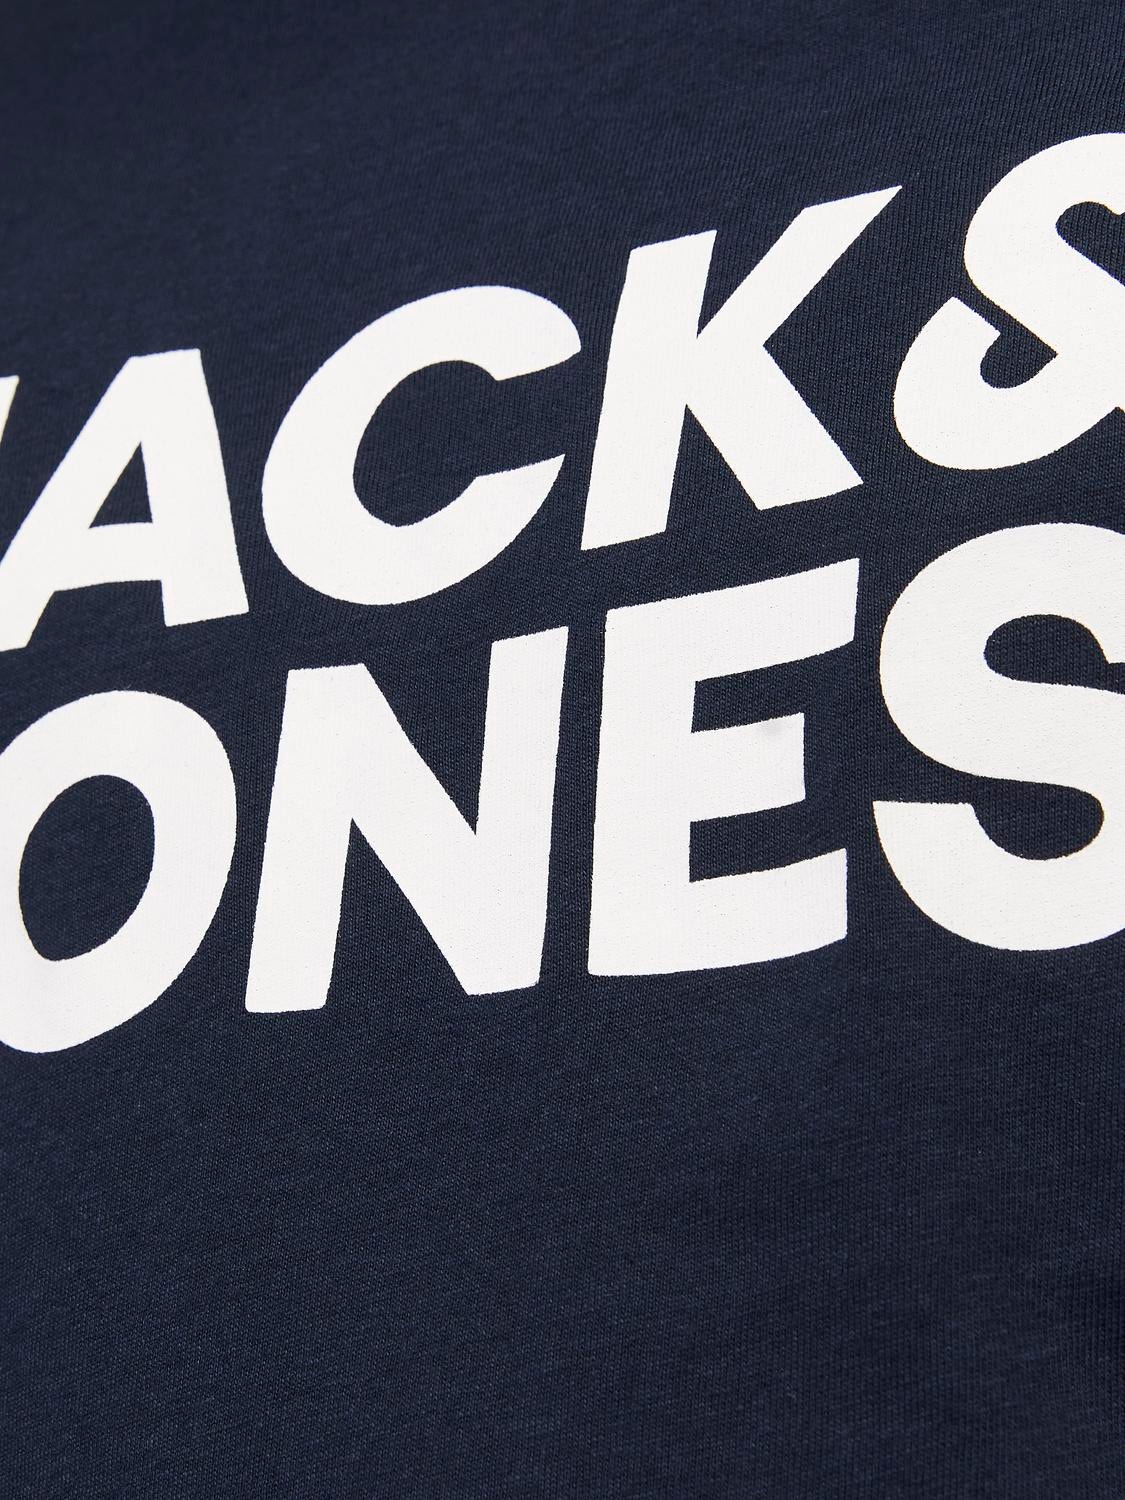 Jack & Jones Poikien Logo T-paita -Navy Blazer - 12152730